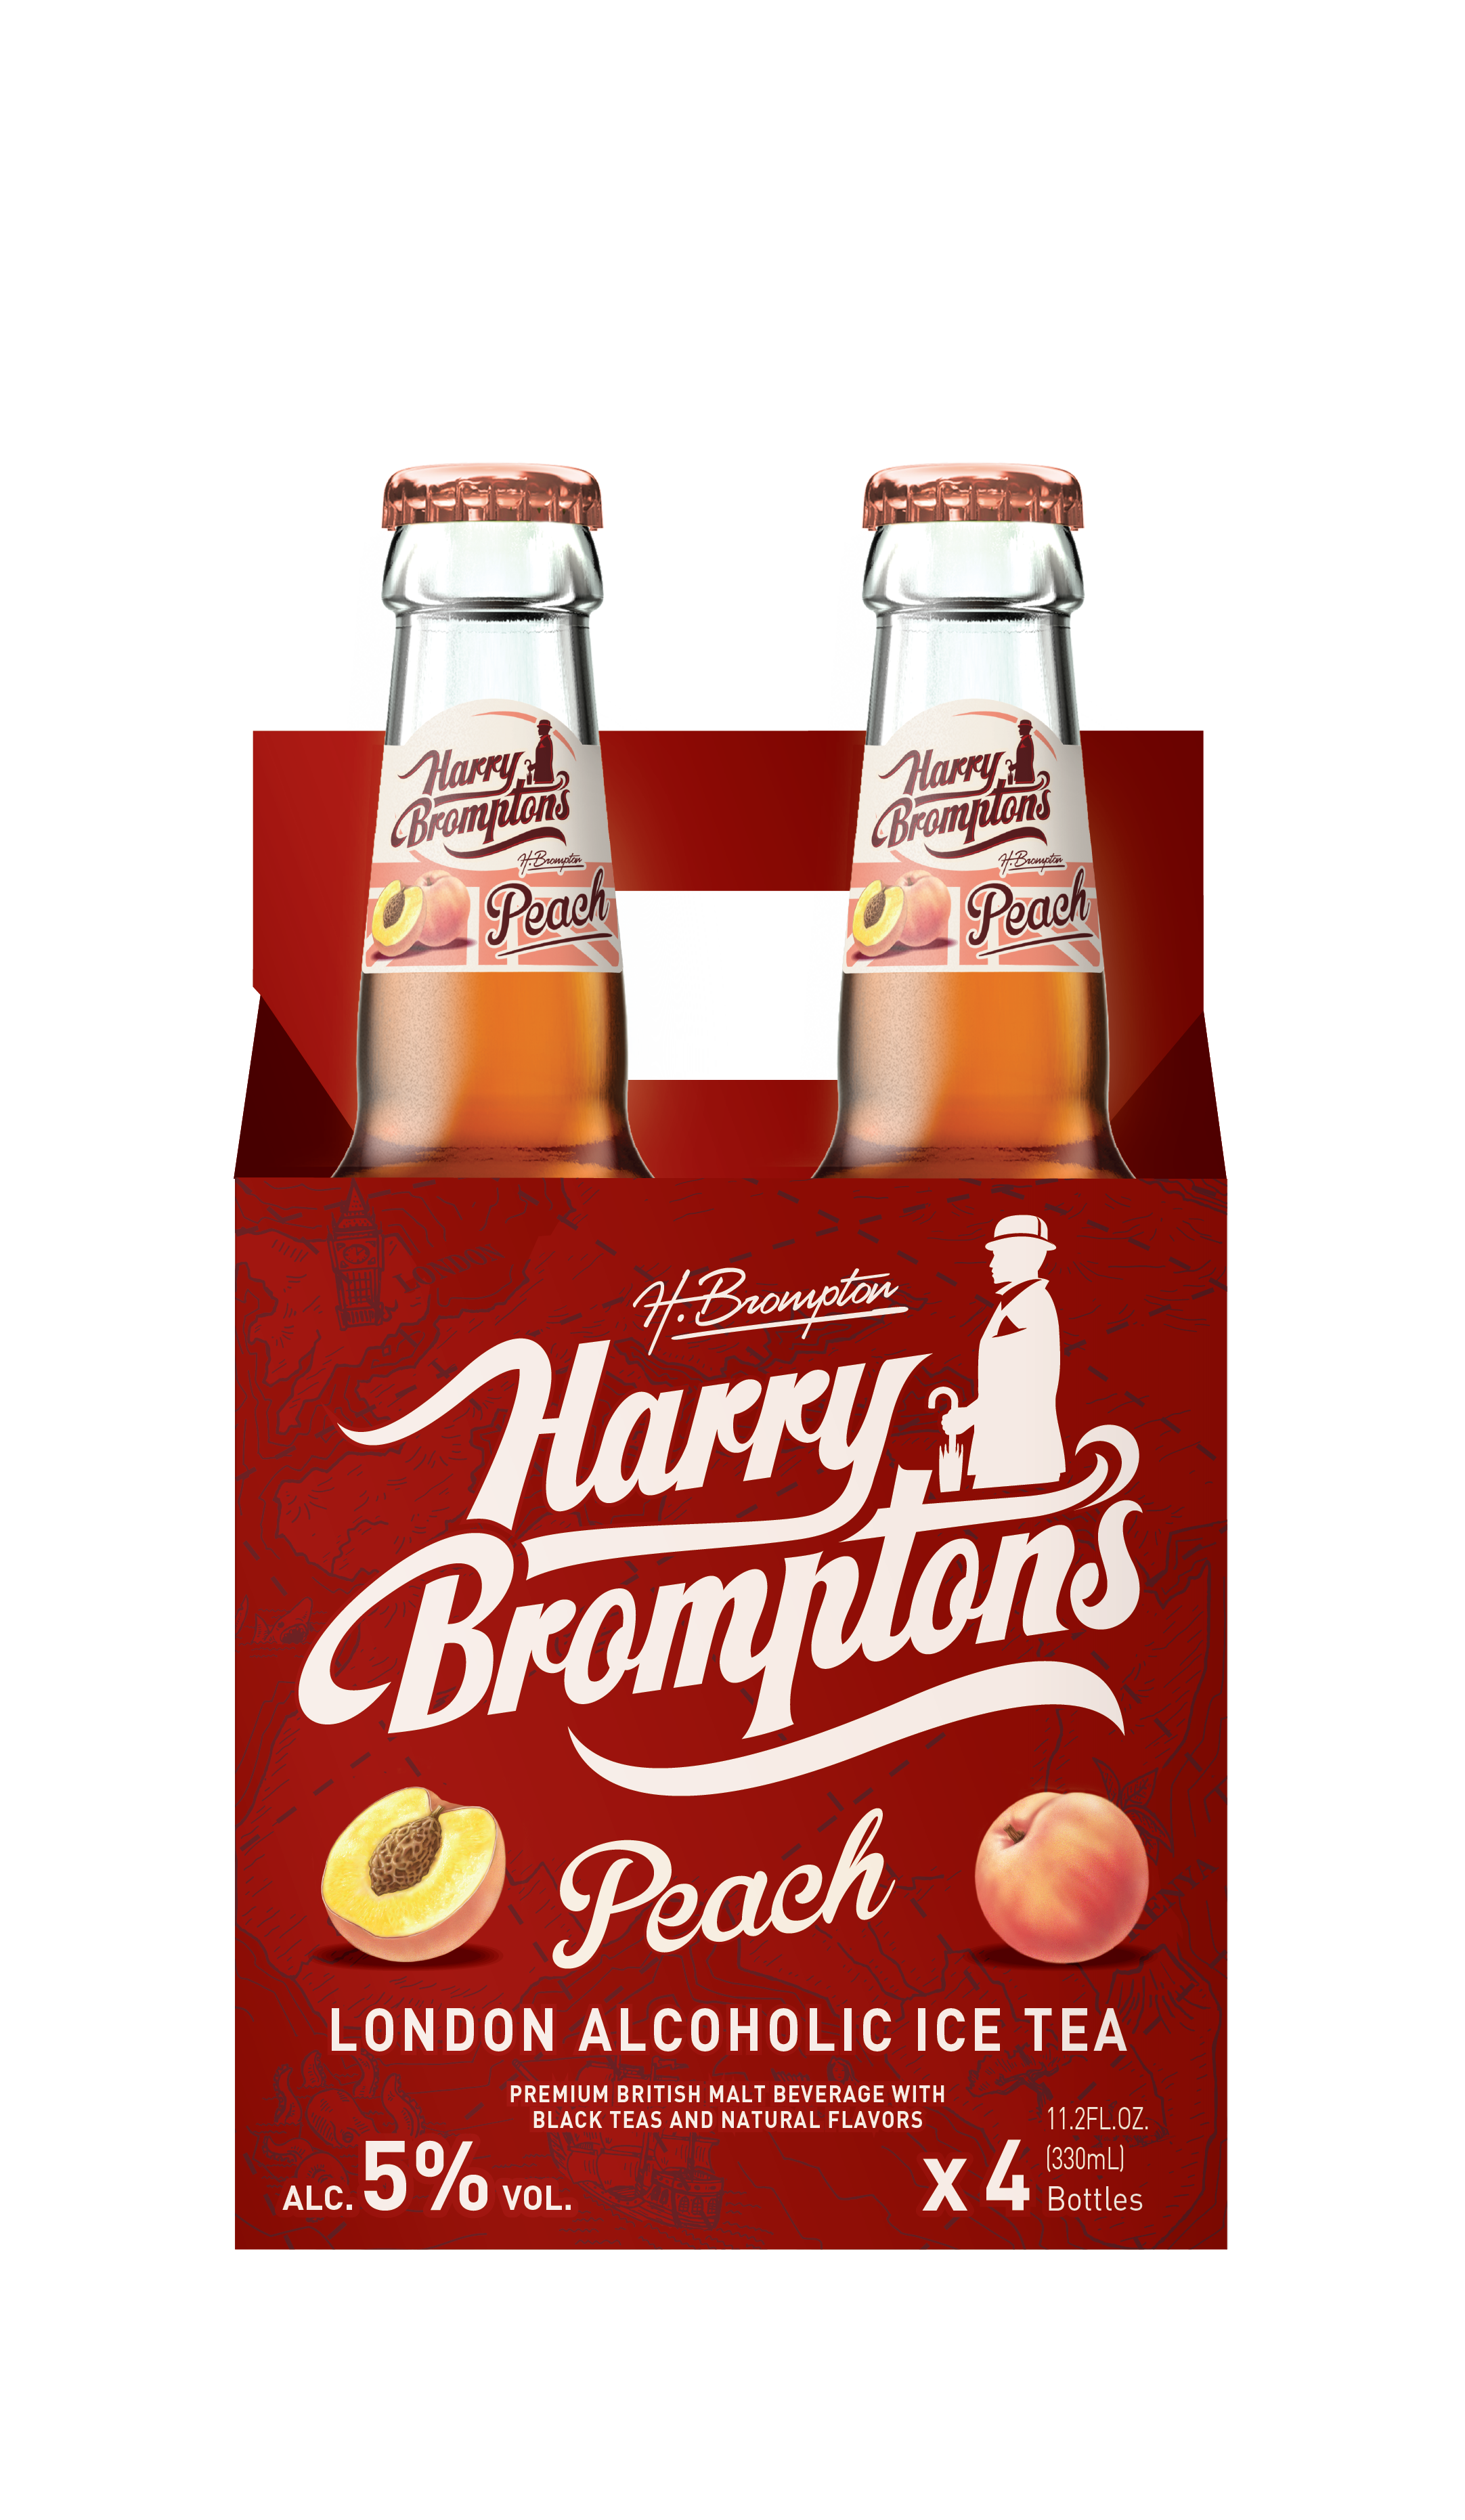 A rather splendid 4 pack of Harry Brompton's London "Peach" Alcoholic Ice Tea